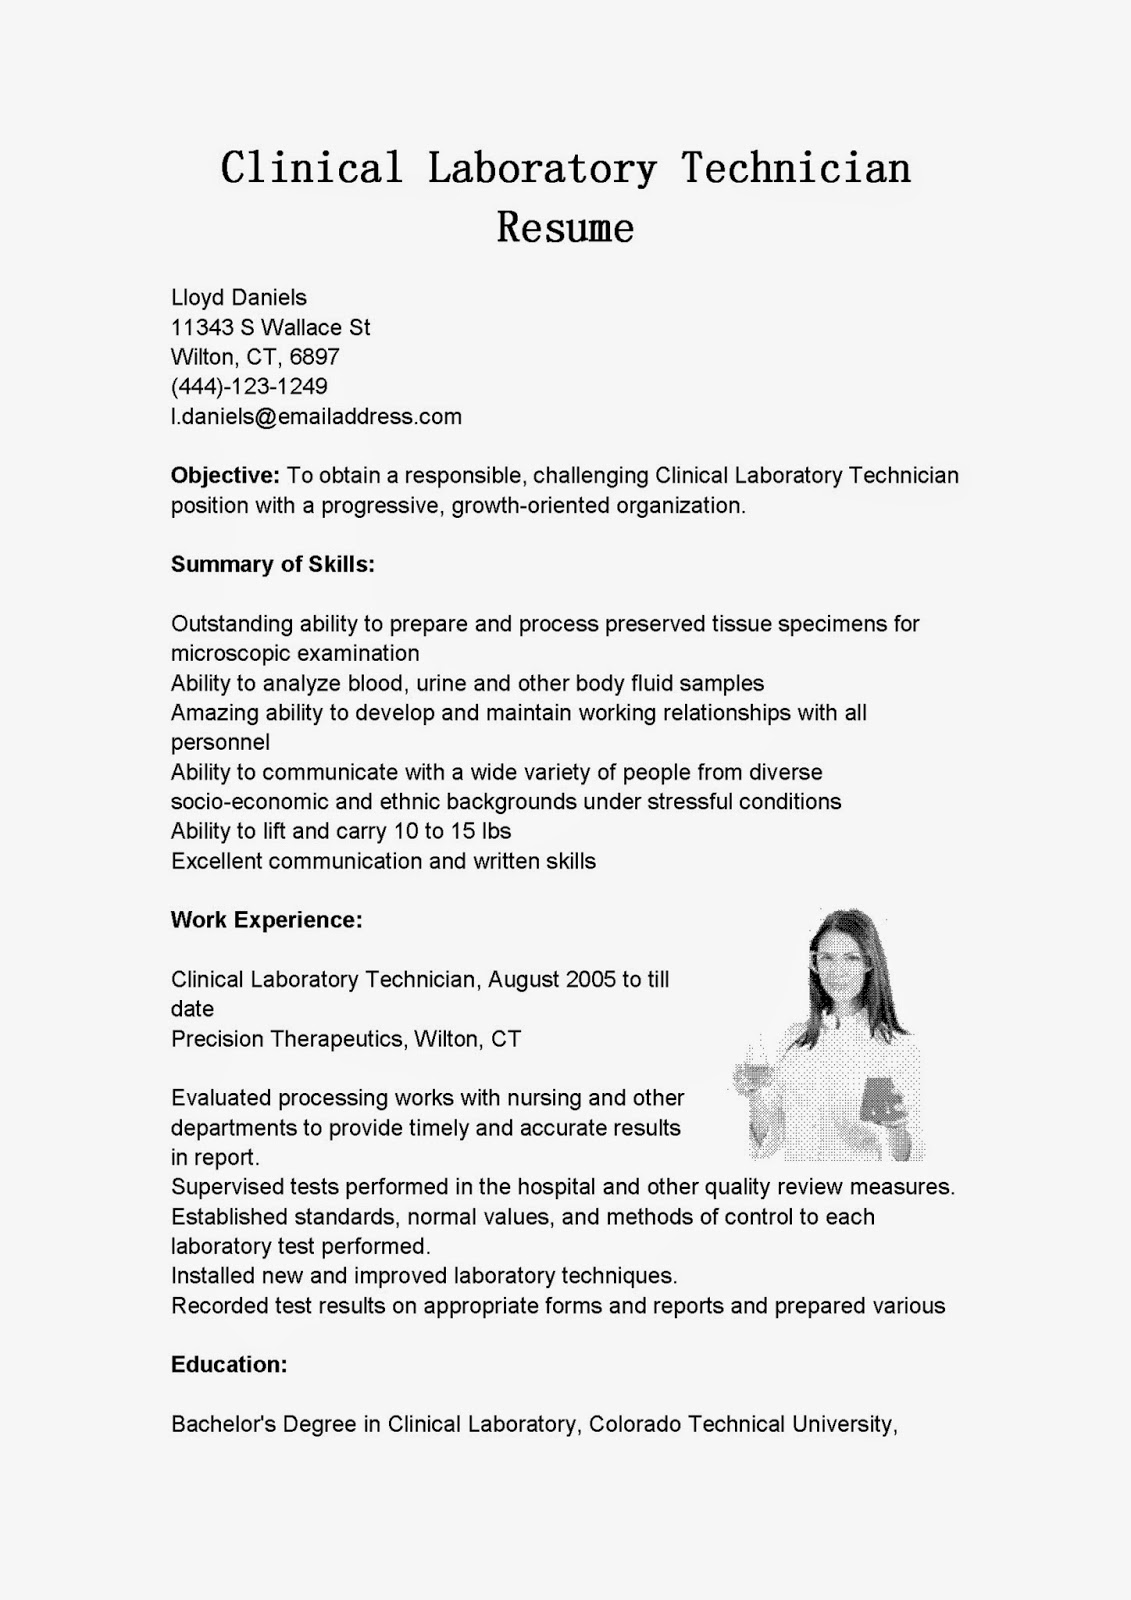 Resume Samples: Clinical Laboratory Technician Resume Sample